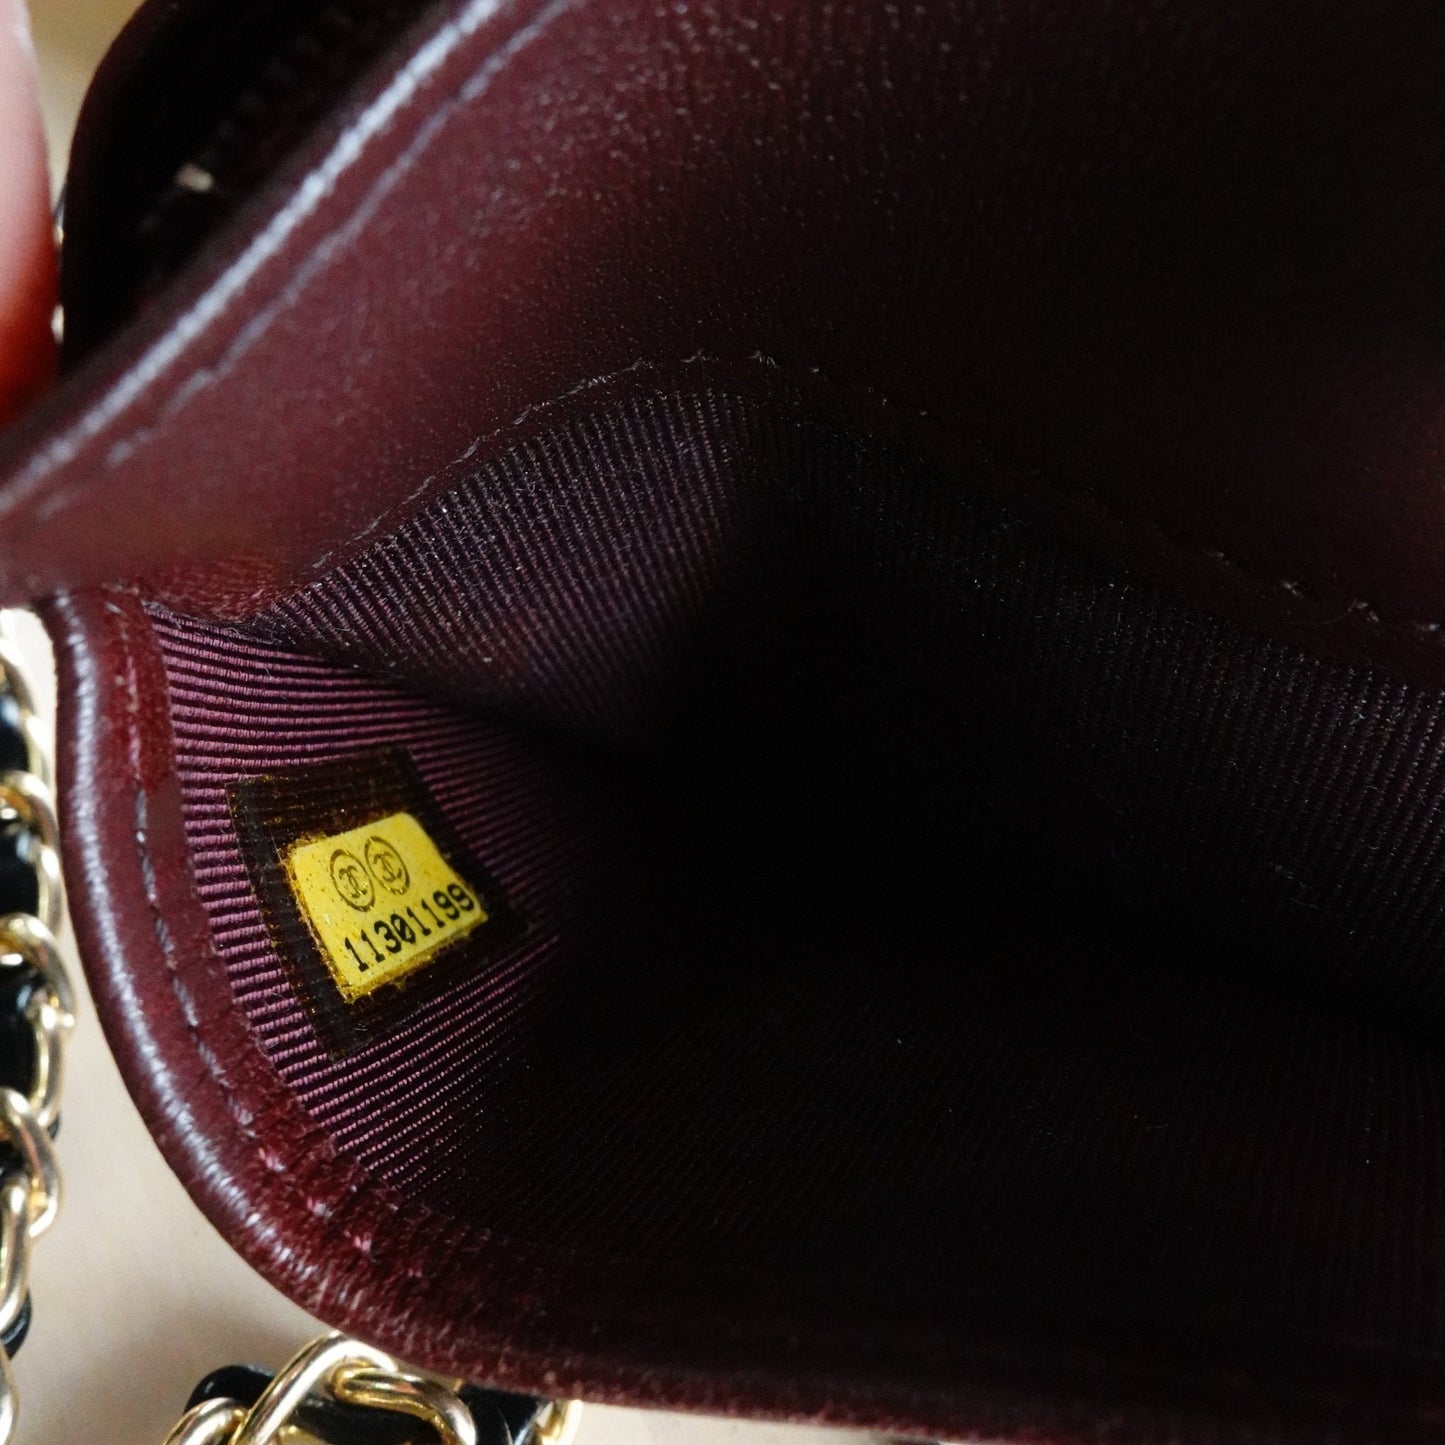 CHANEL Lambskin Bifold Wallet with Adjustable Chain-TT - Bag Envy